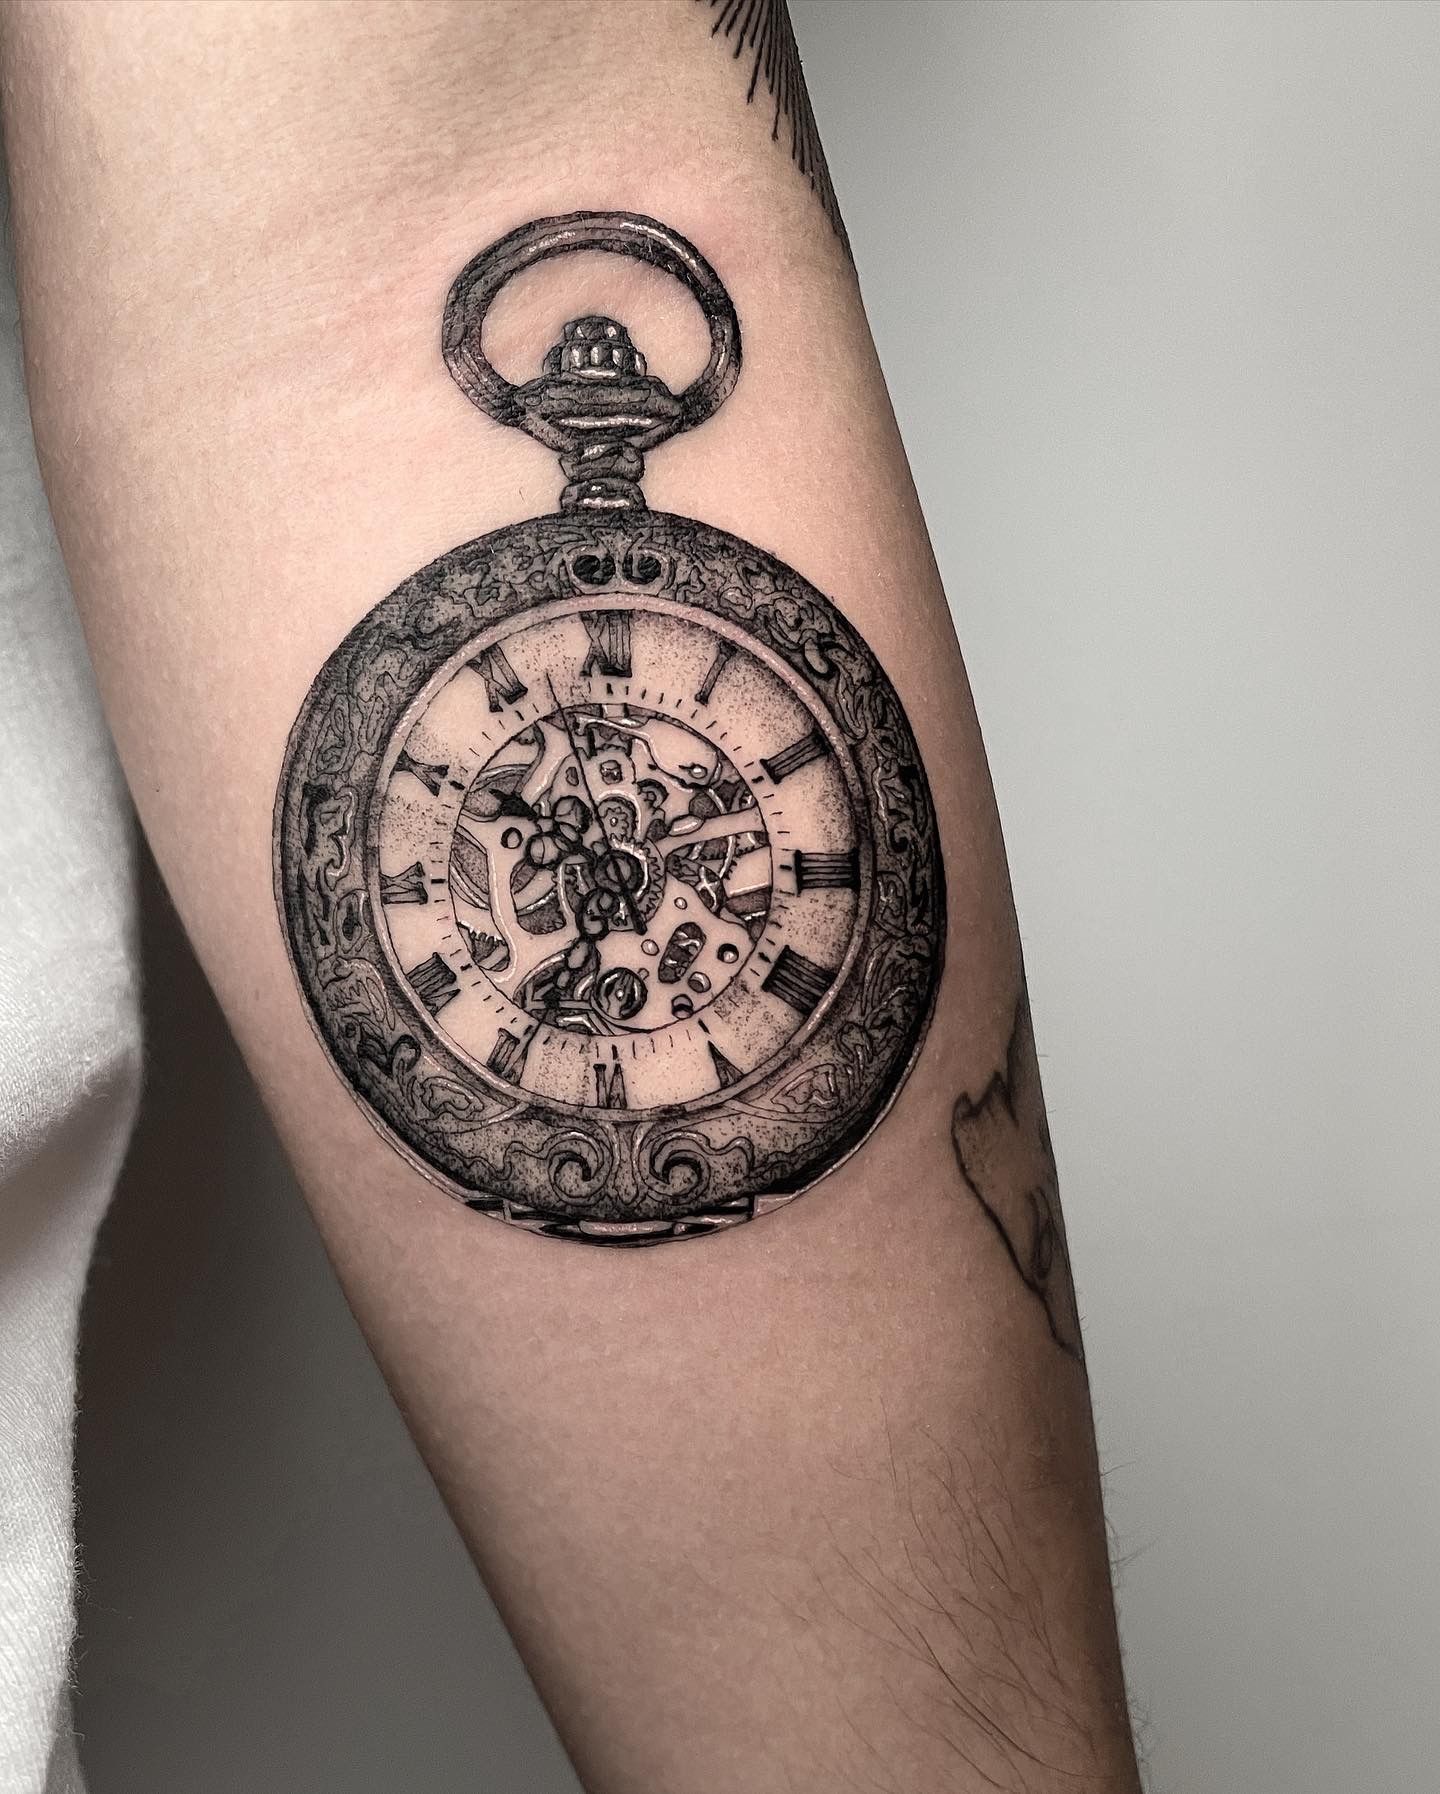 two clock faces tattoo by the amazing Ivan Morant at Wanda Tattoo, London :  r/tattoo